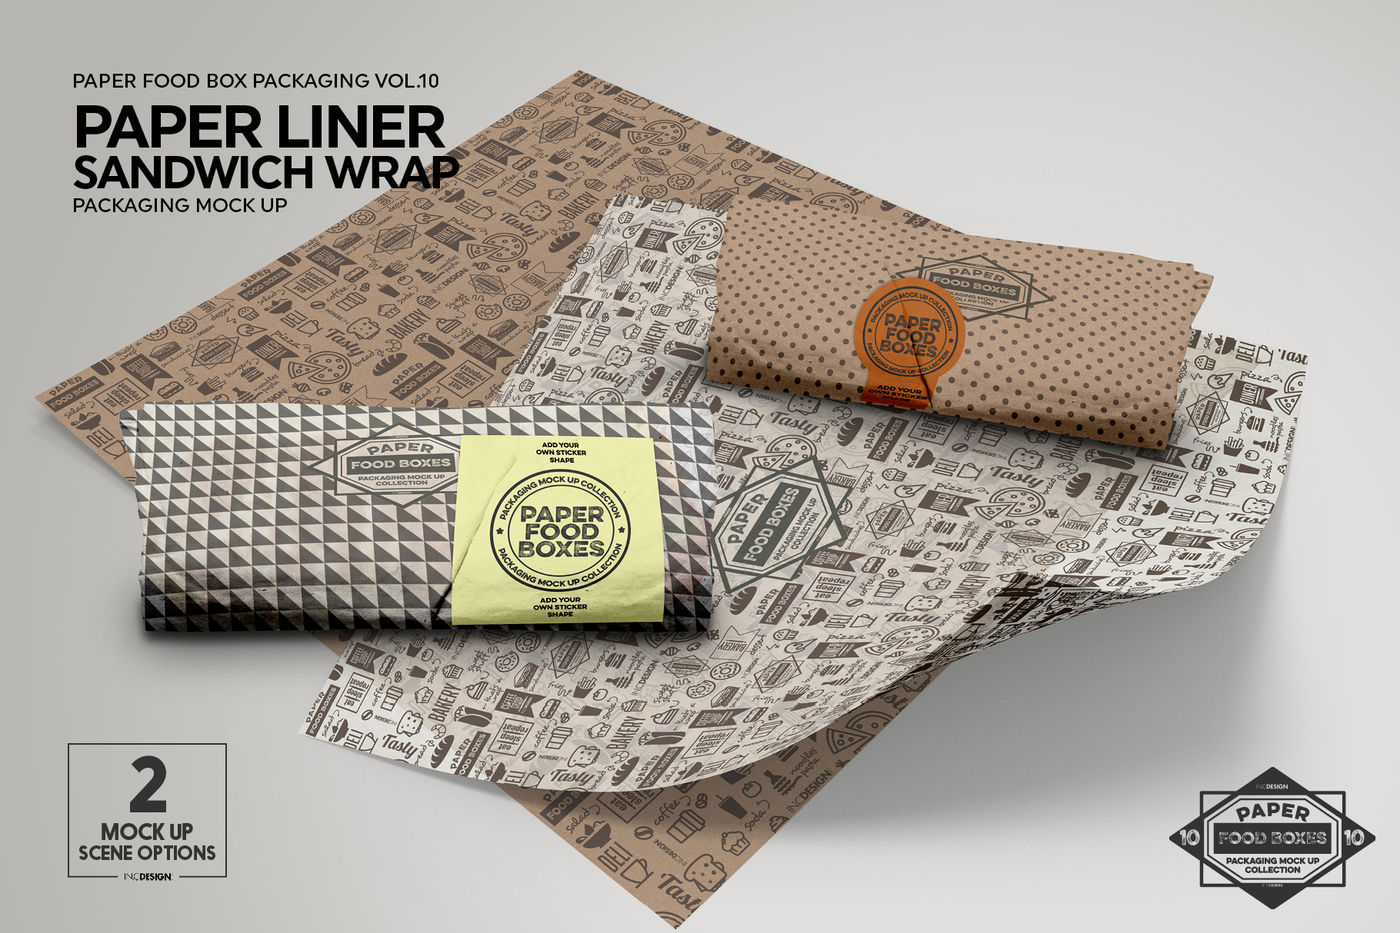 Download Wrap Sandwich Burrito Paper Liner Mockup By Inc Design Studio Thehungryjpeg Com